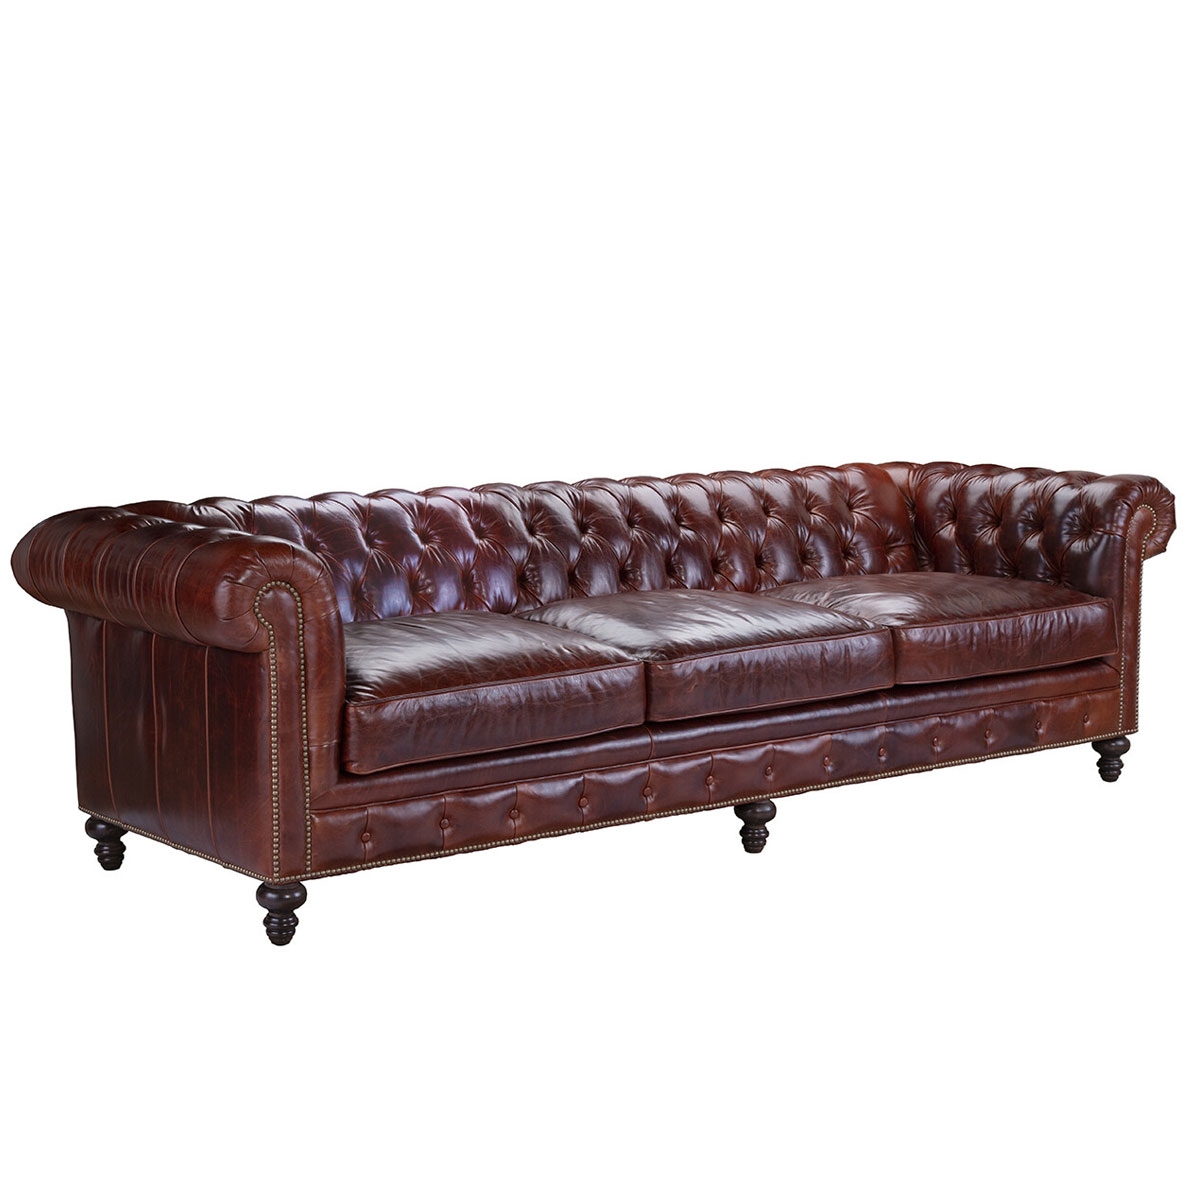 617 Bradley Sofa by CC Leather